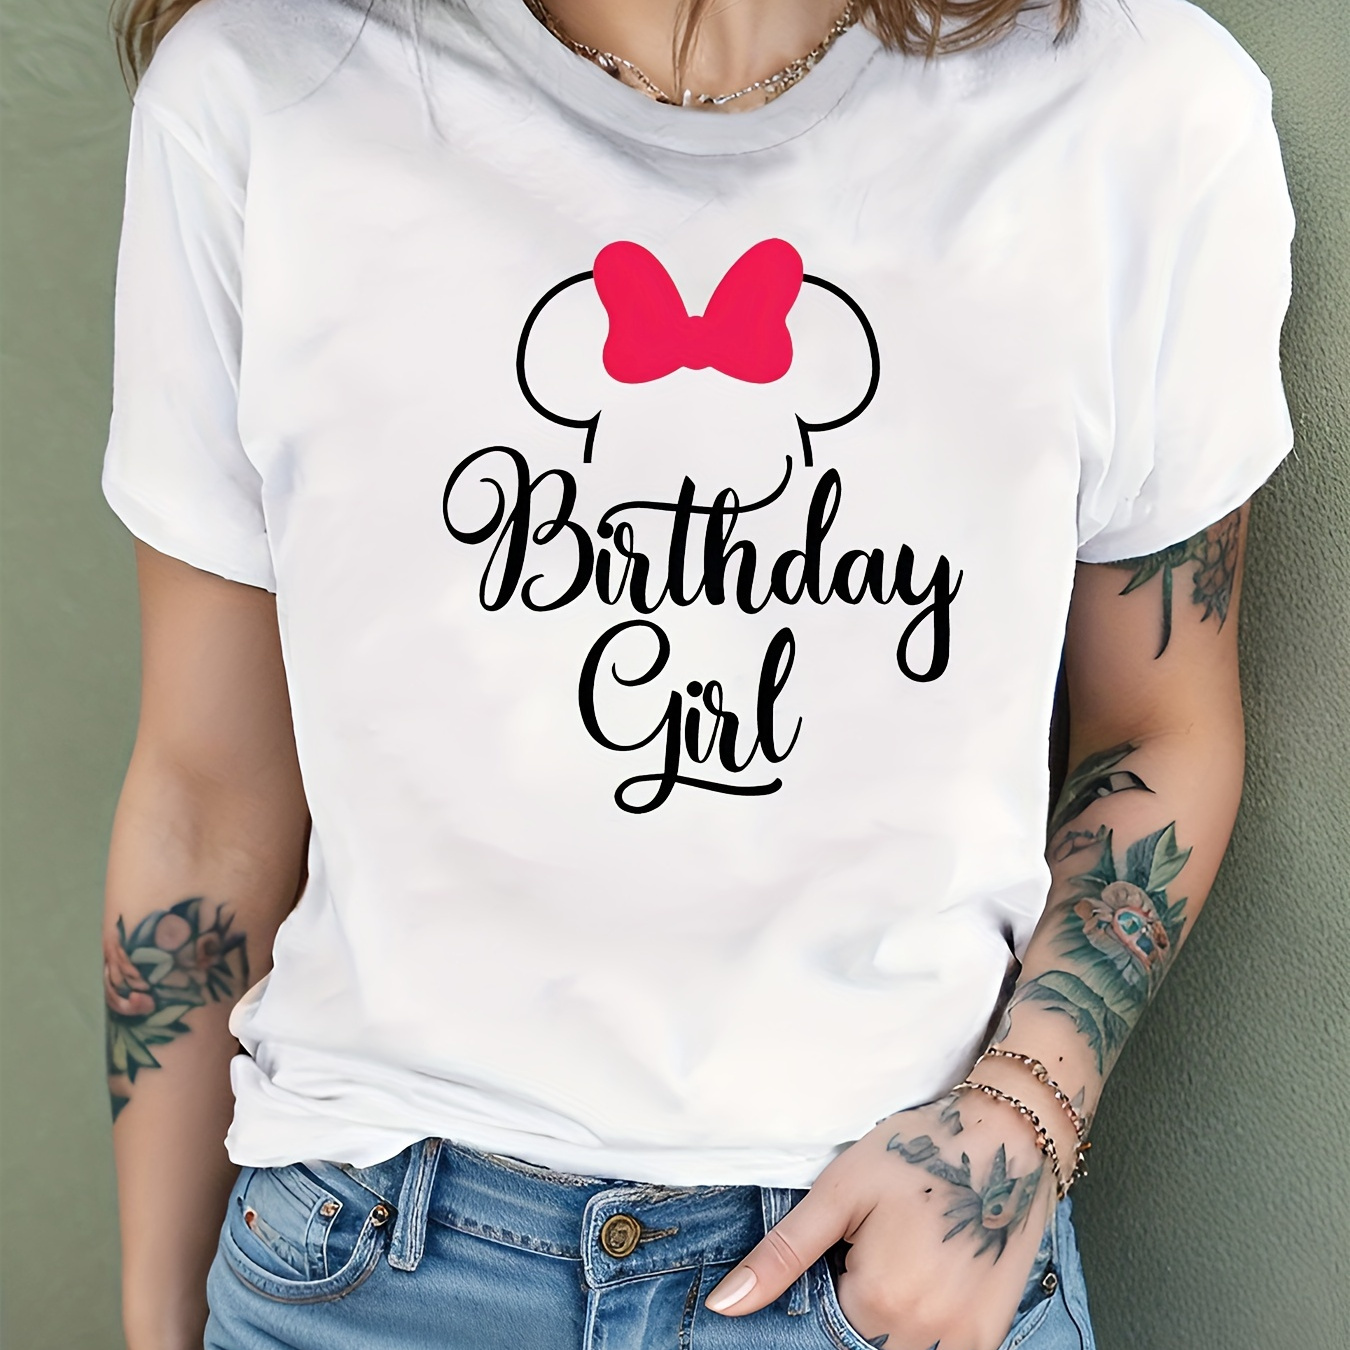 

Birthday Girl Graphic Short Sleeves Sports Tee, Round Neck Causal T-shirt, Women's Activewear